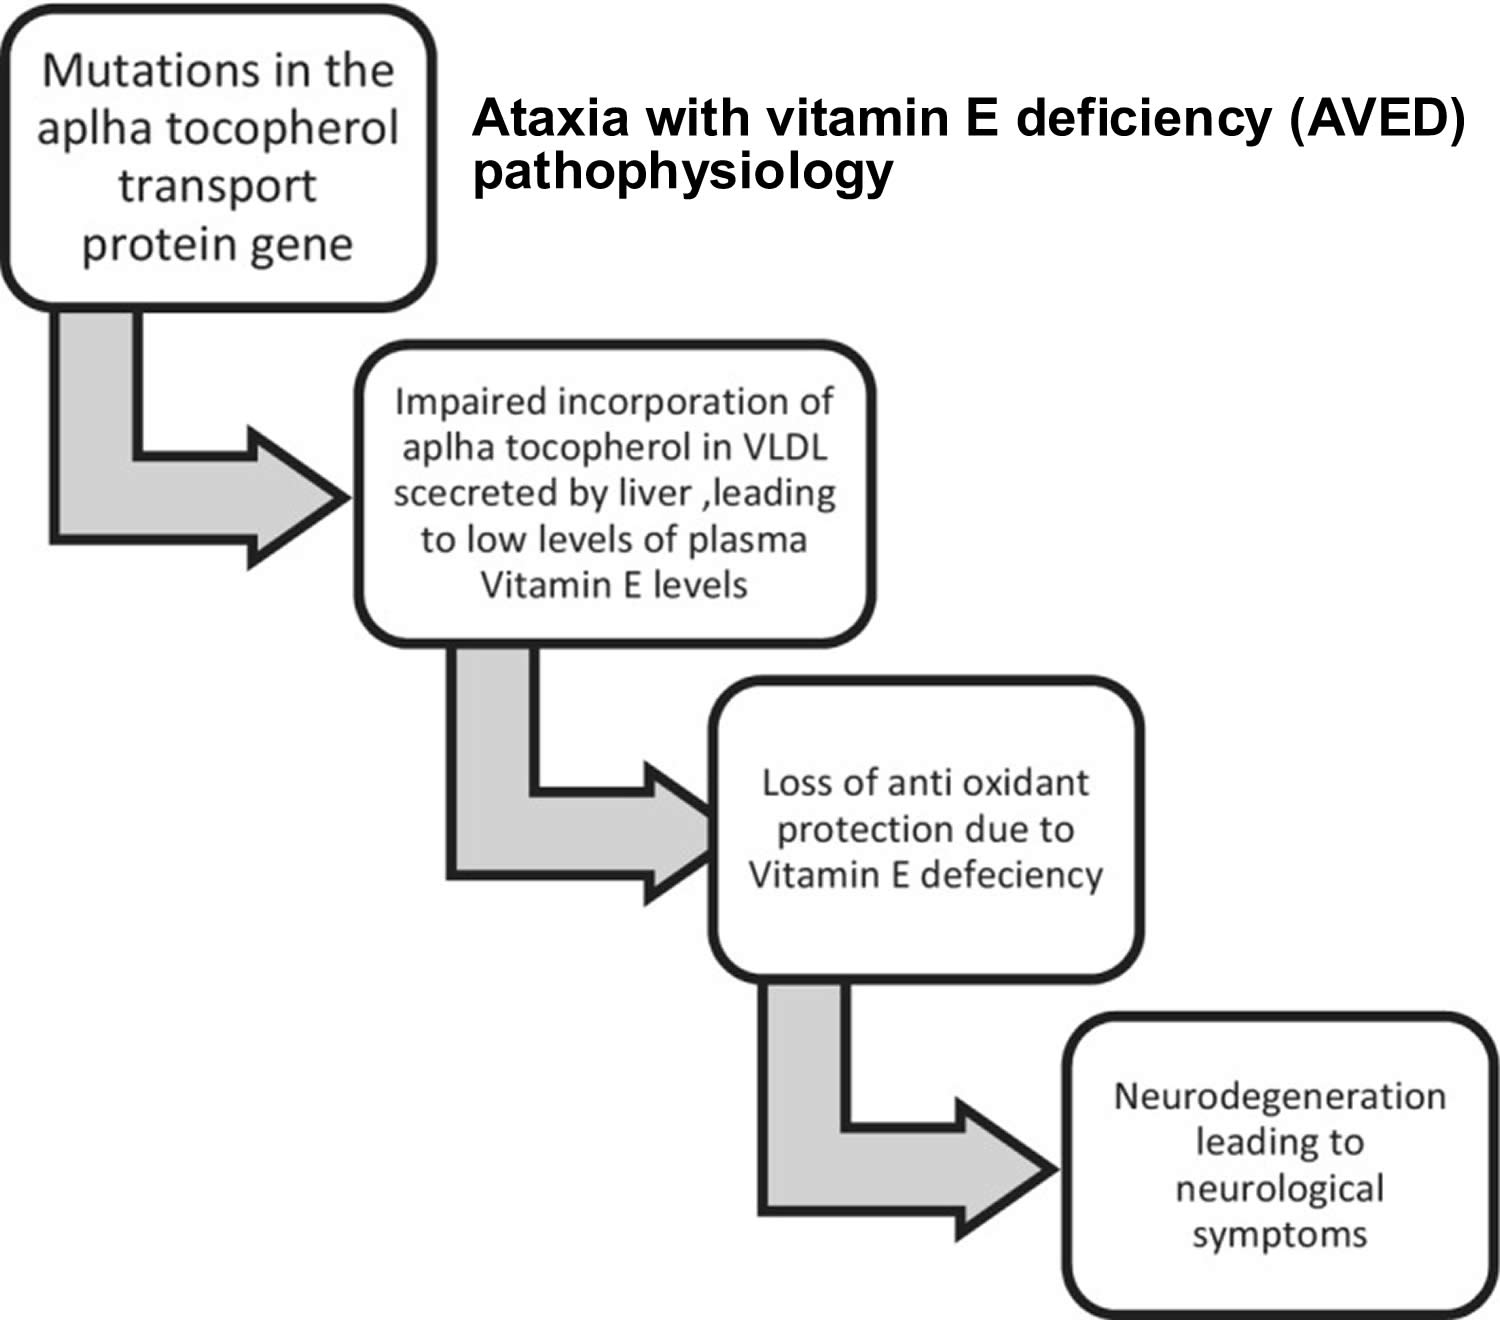 Ataxia with vitamin E deficiency pathophysiology